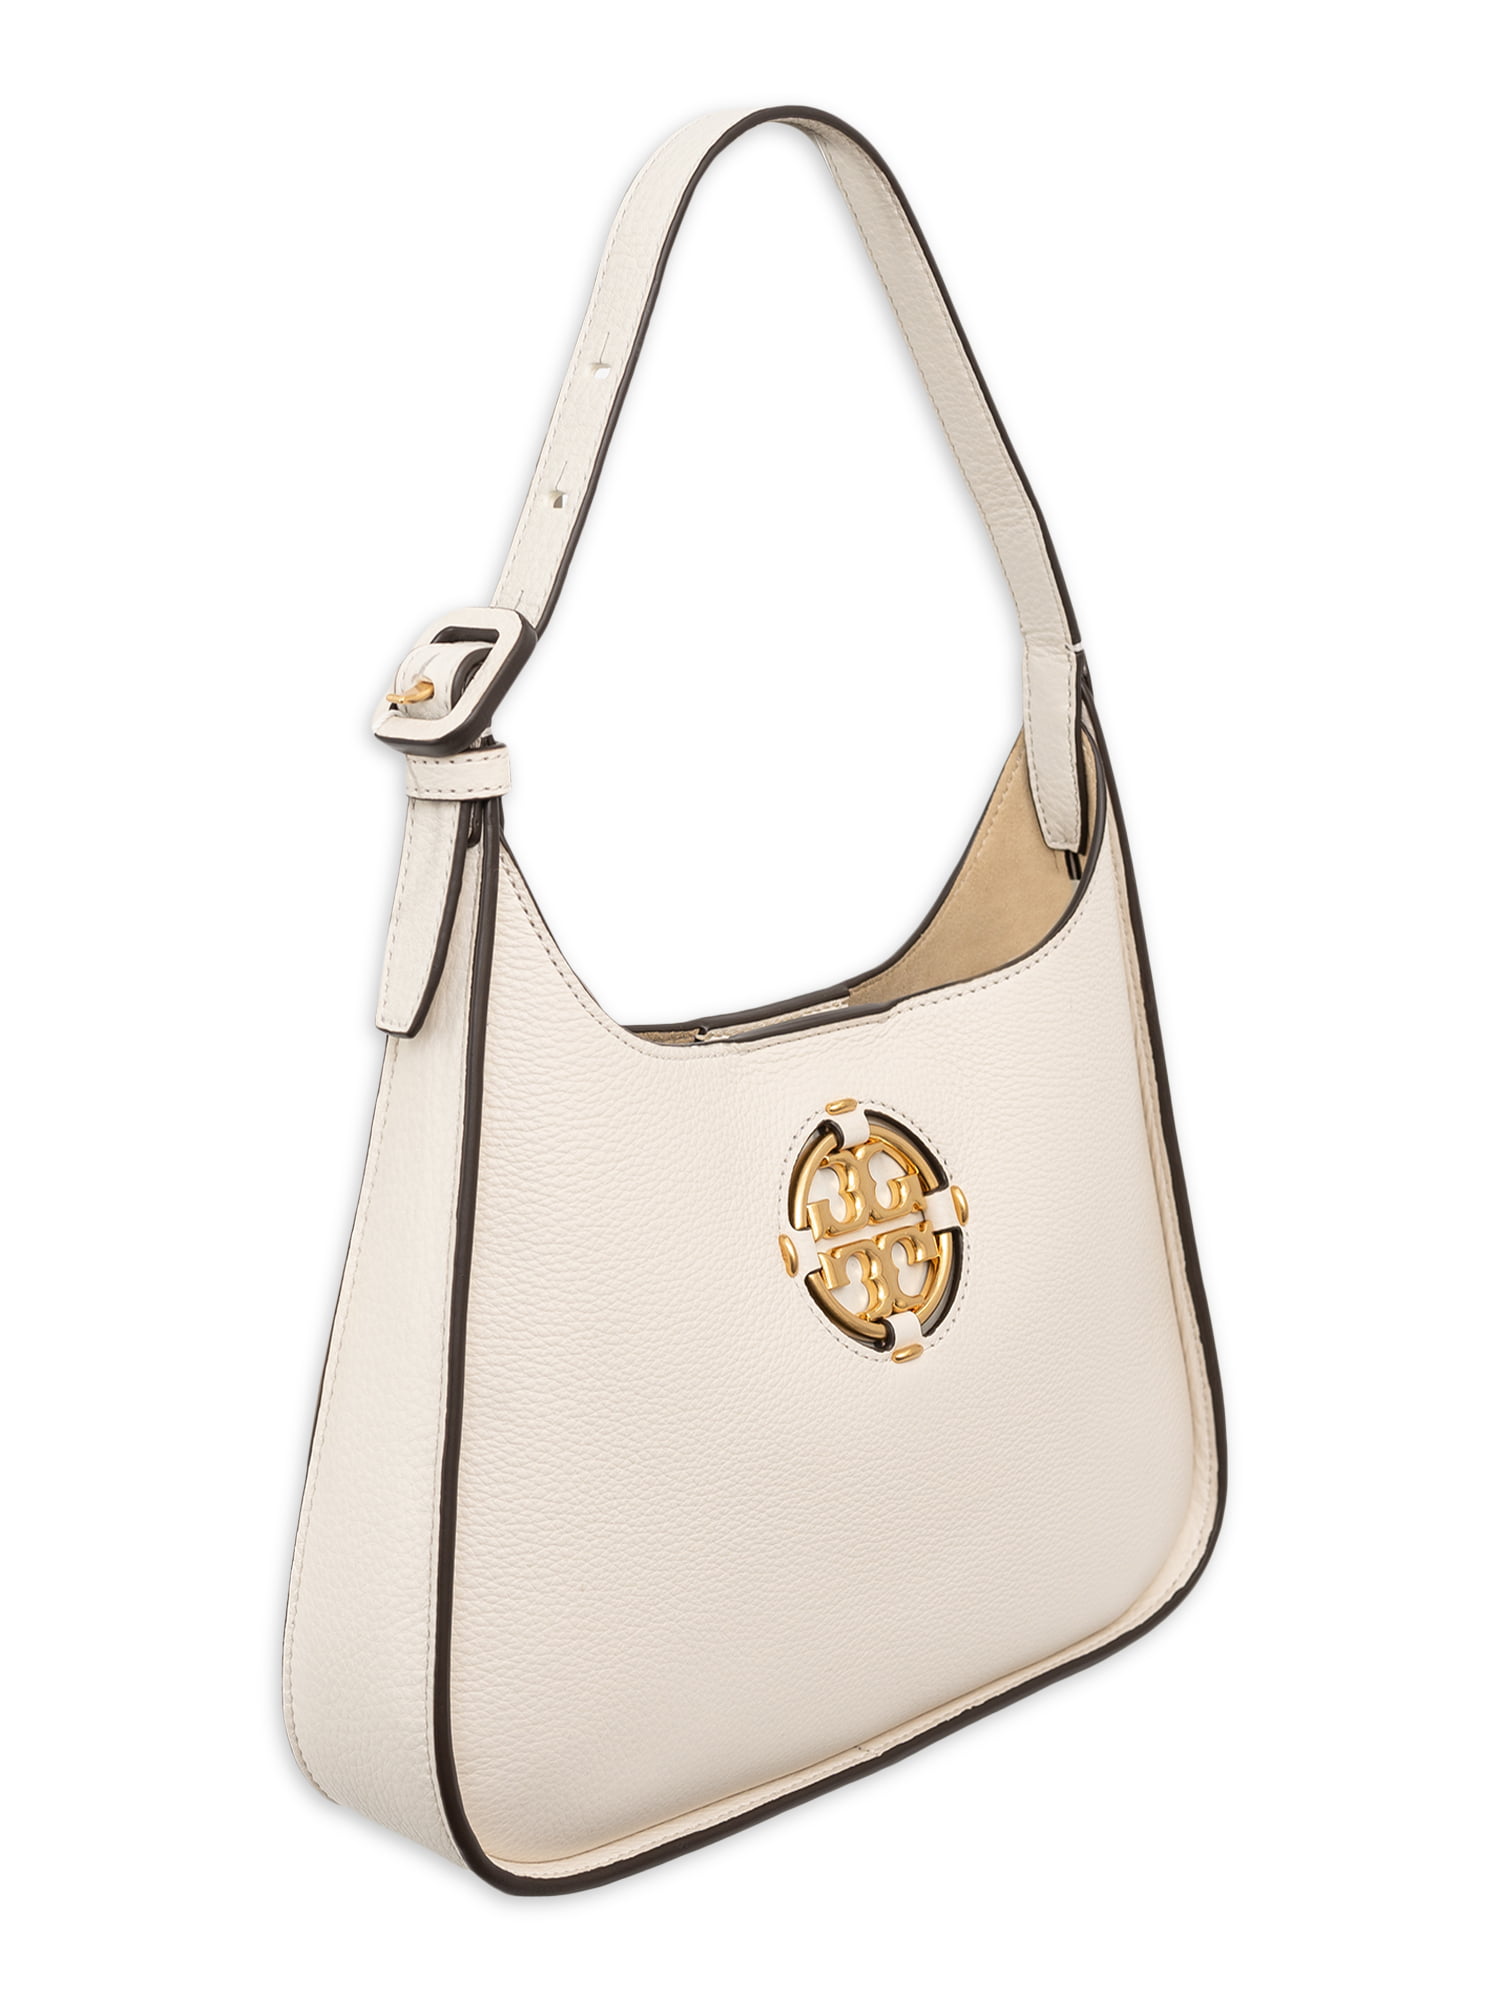 Tory Burch Open Box - Tory Burch Ladies Miller Shoulder Bag- Light Umber  81688-905 - Handbags - Jomashop